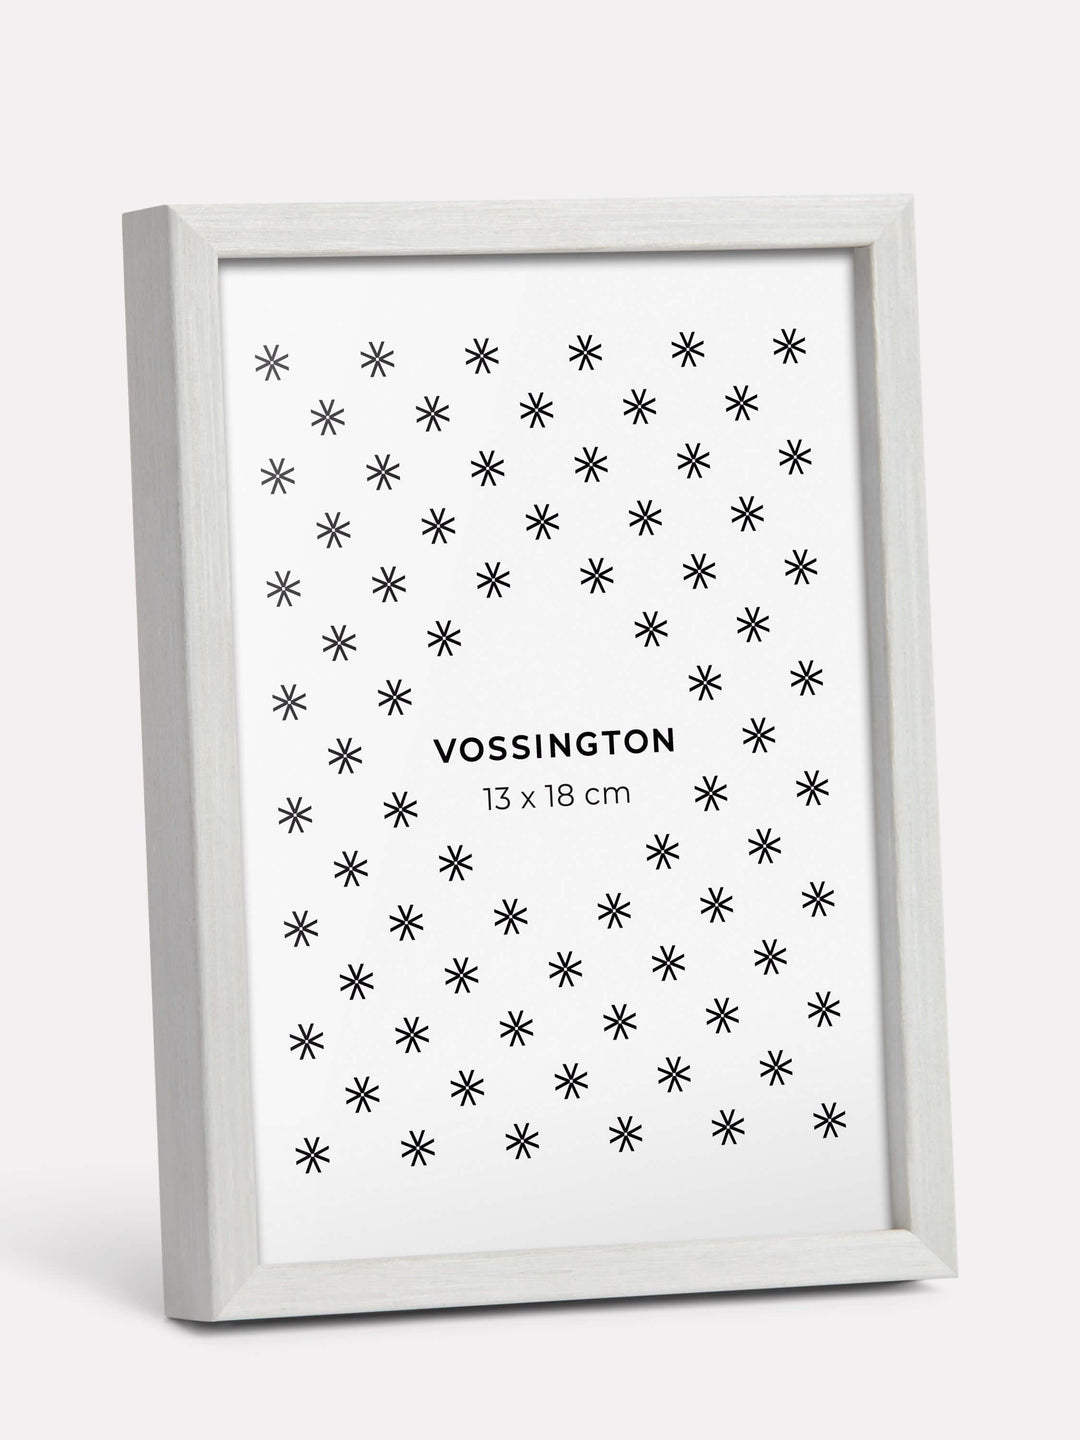 Classic Picture Frame, White, 40x60 cm (16x24 in) - Vossington